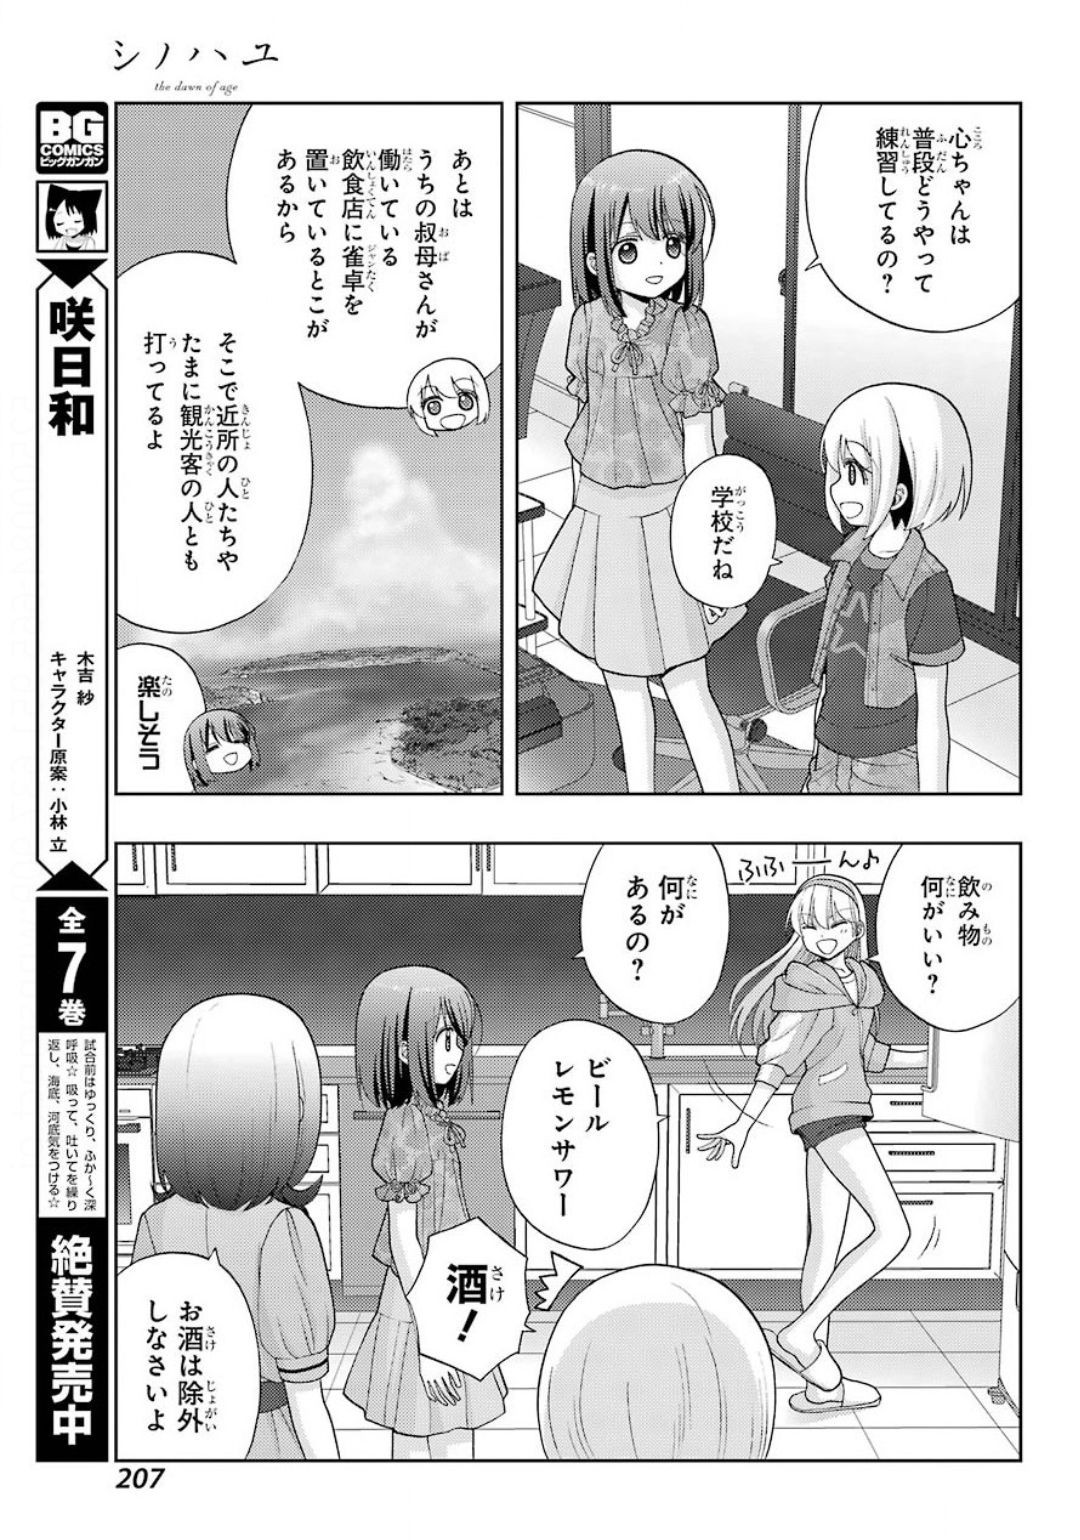 Shinohayu - The Dawn of Age Manga - Chapter 081 - Page 6